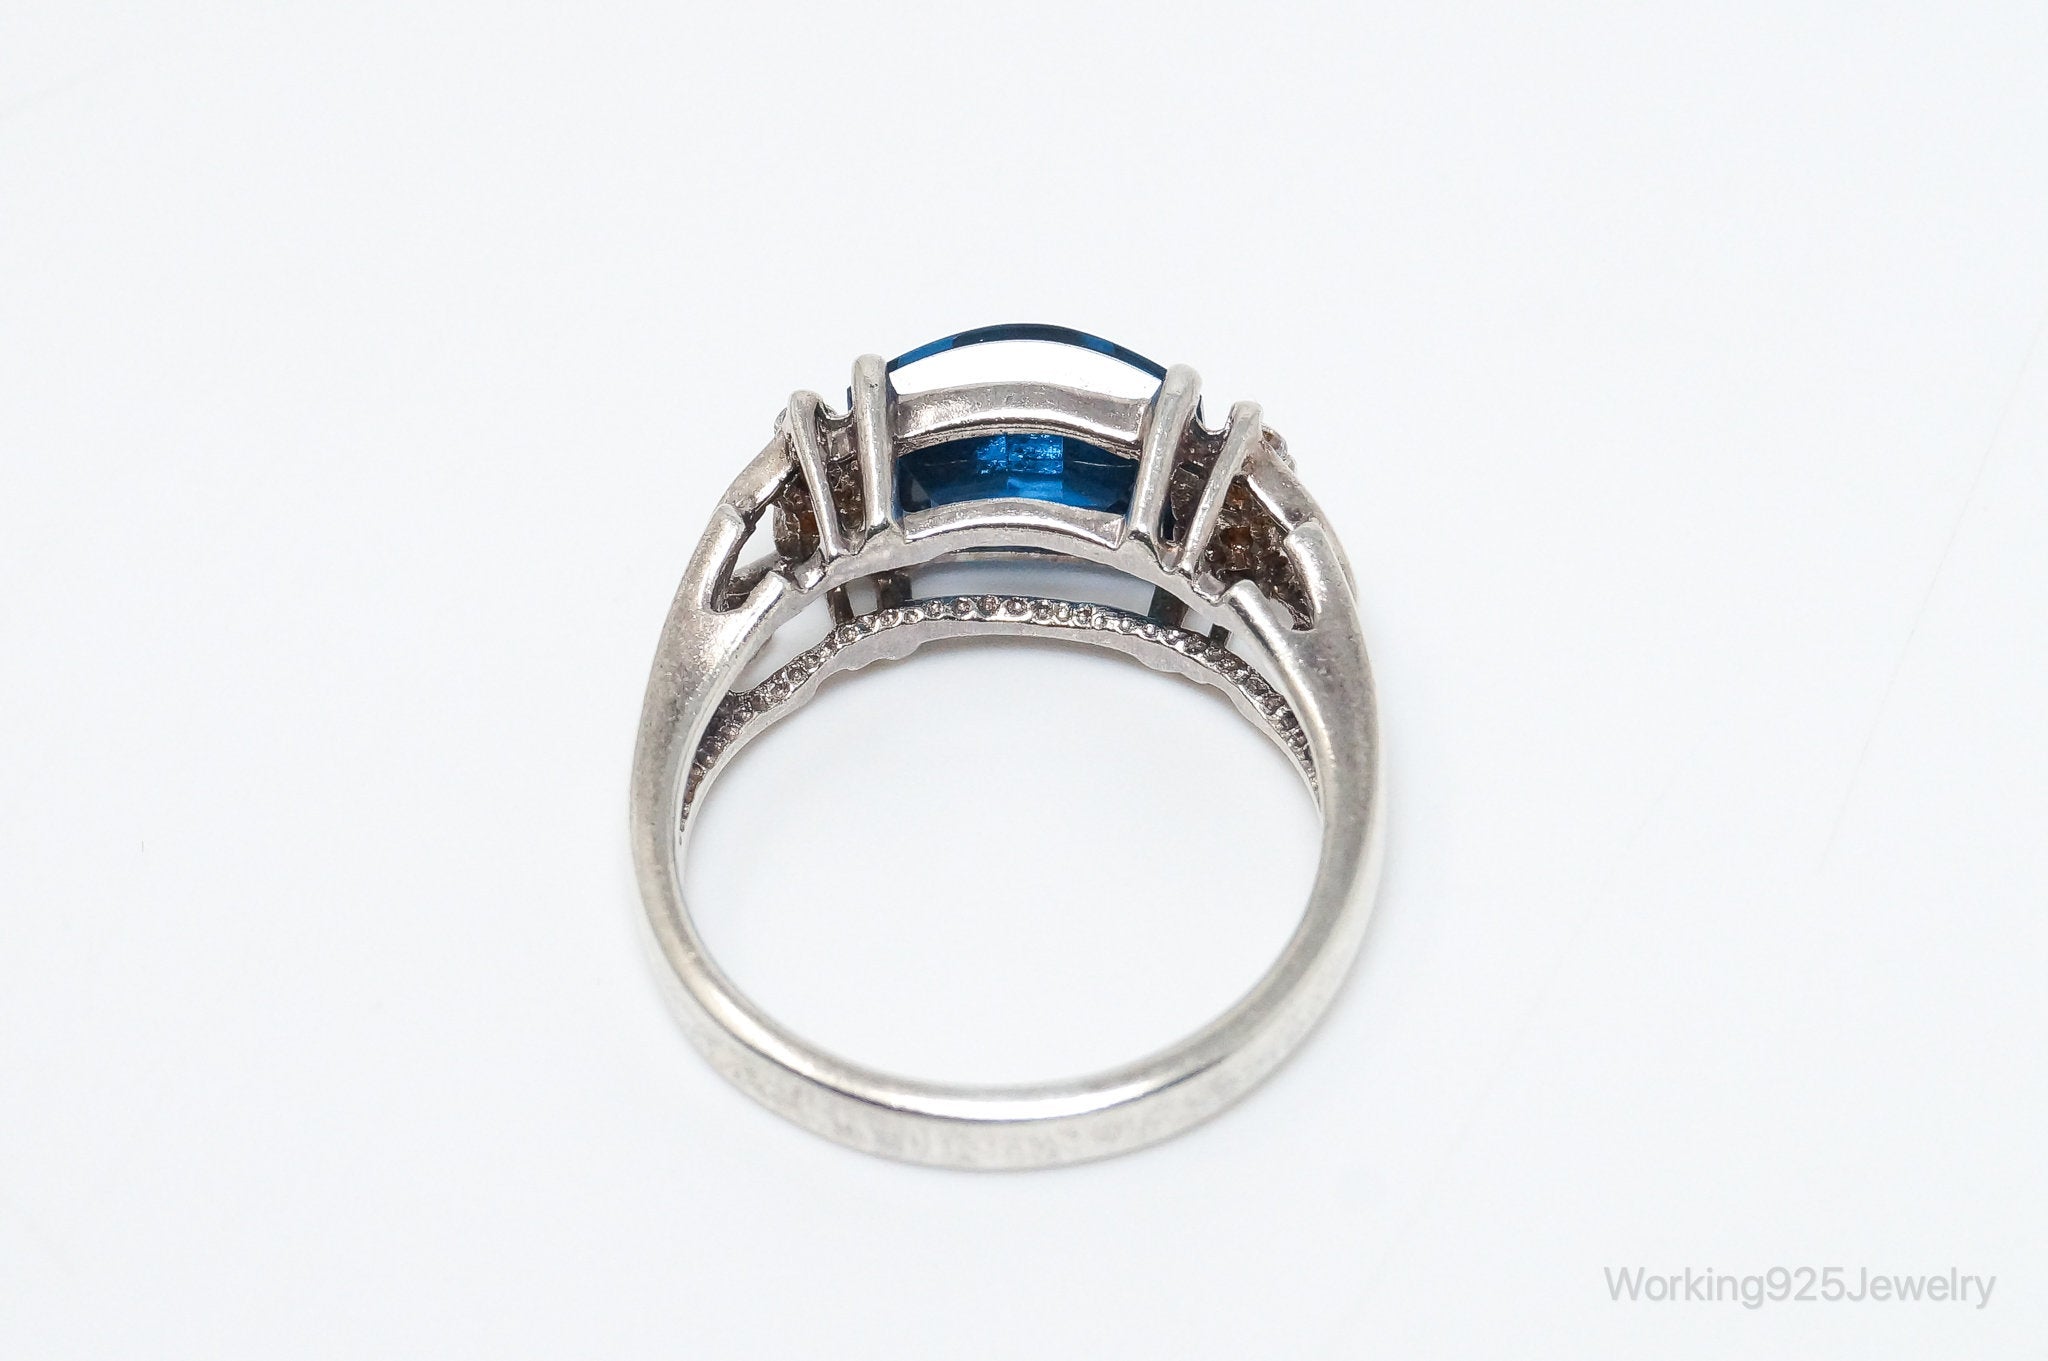 Vintage Art Deco Style Blue Diamonique Cubic Zirconia Sterling Silver Ring SZ 8